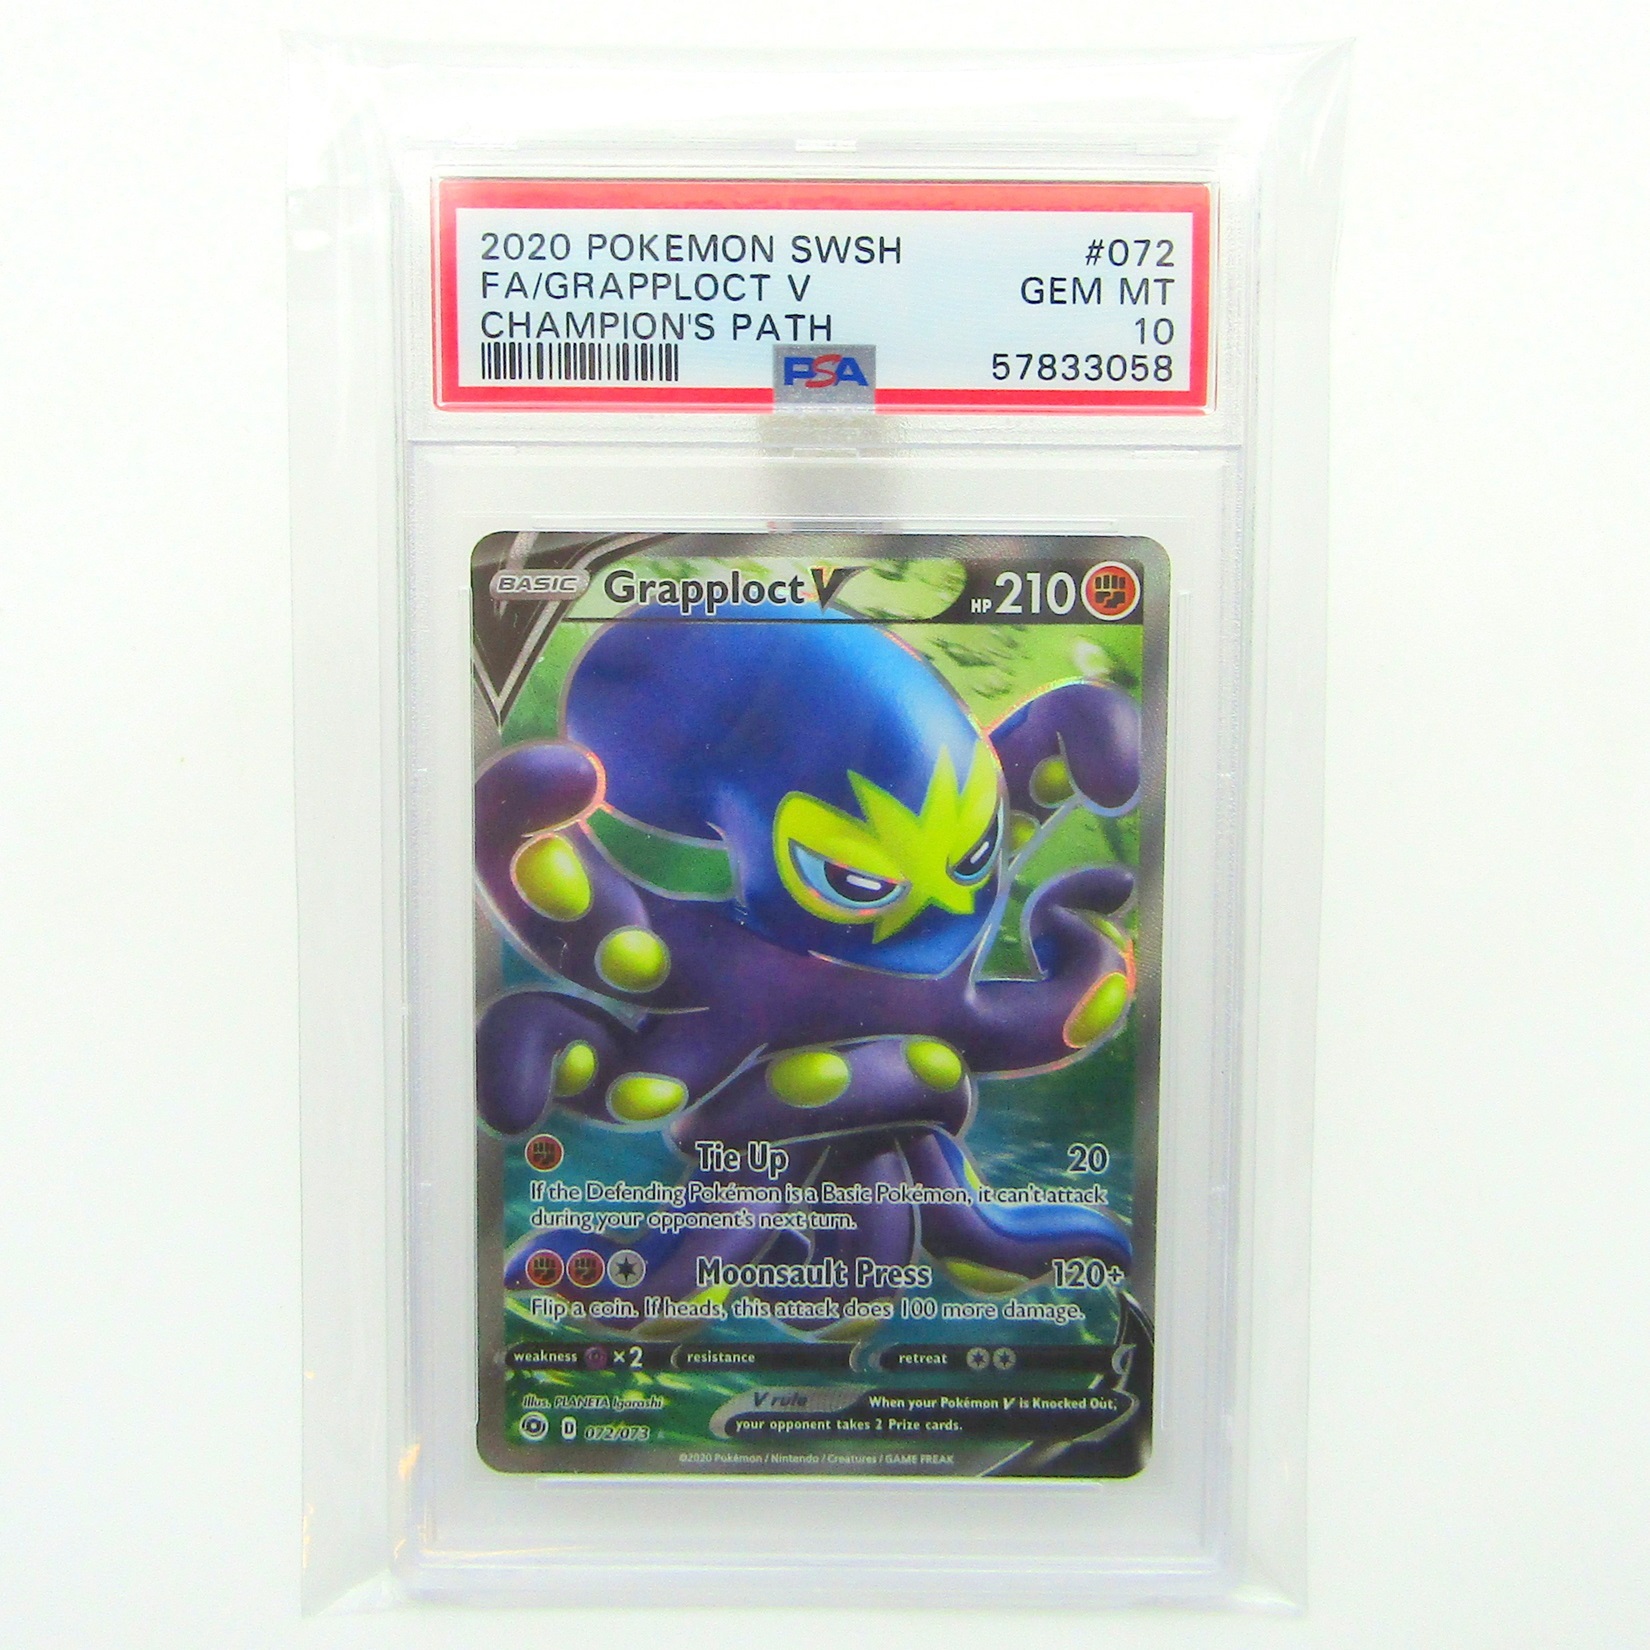 Pokémon Card. 2020. ENG. Champion's Path. FA Grapploct V. PSA 10